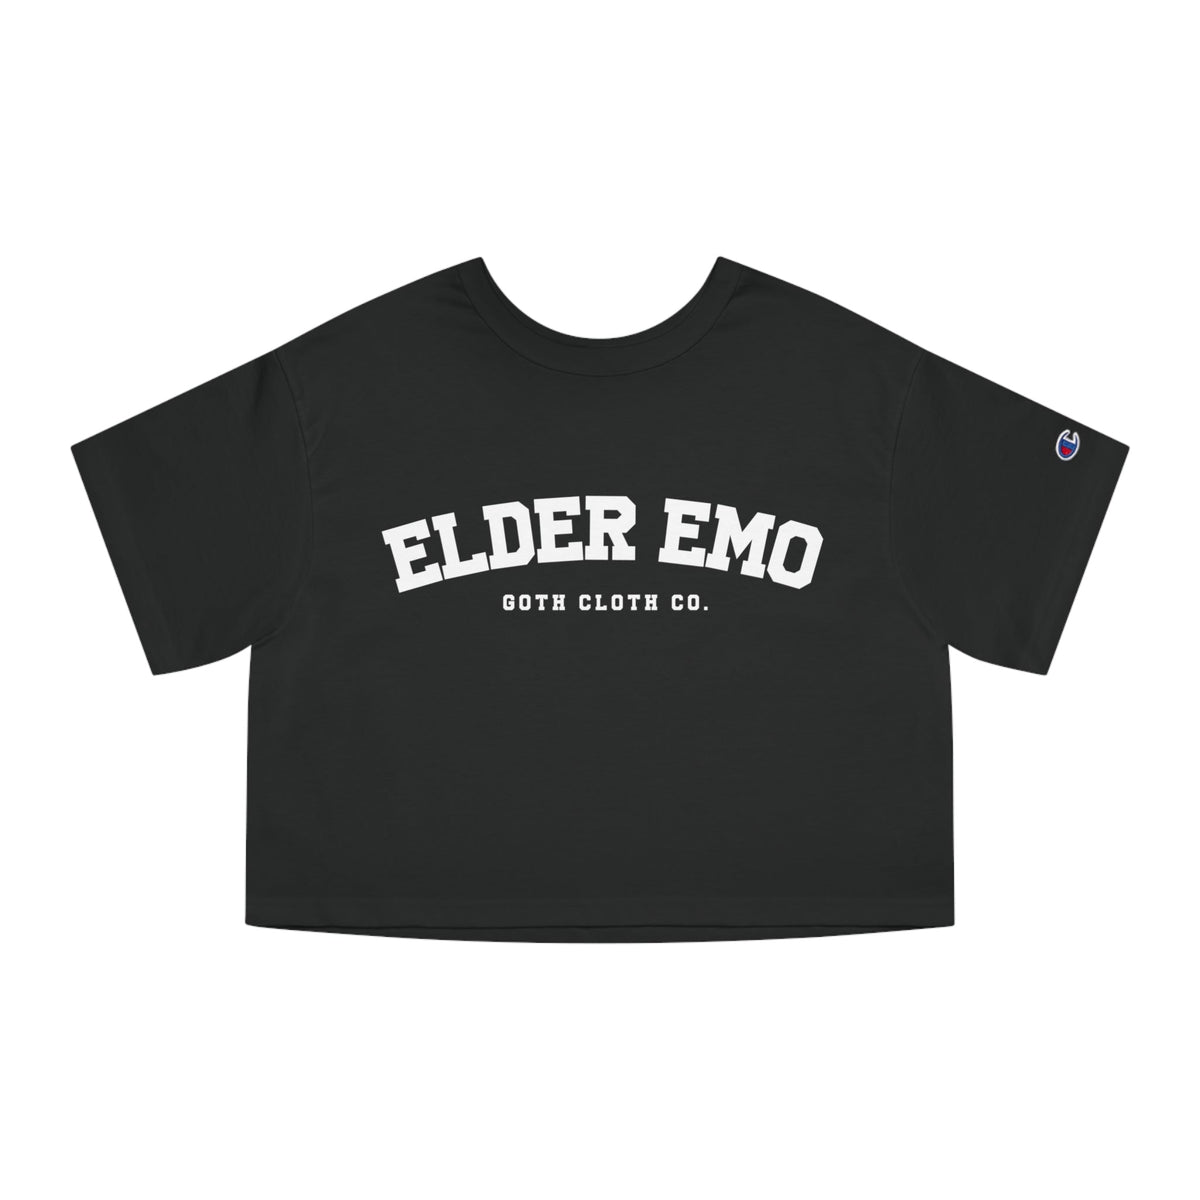 Elder Emo College Heavyweight Cropped T-Shirt - Goth Cloth Co.T-Shirt56783940379100891672